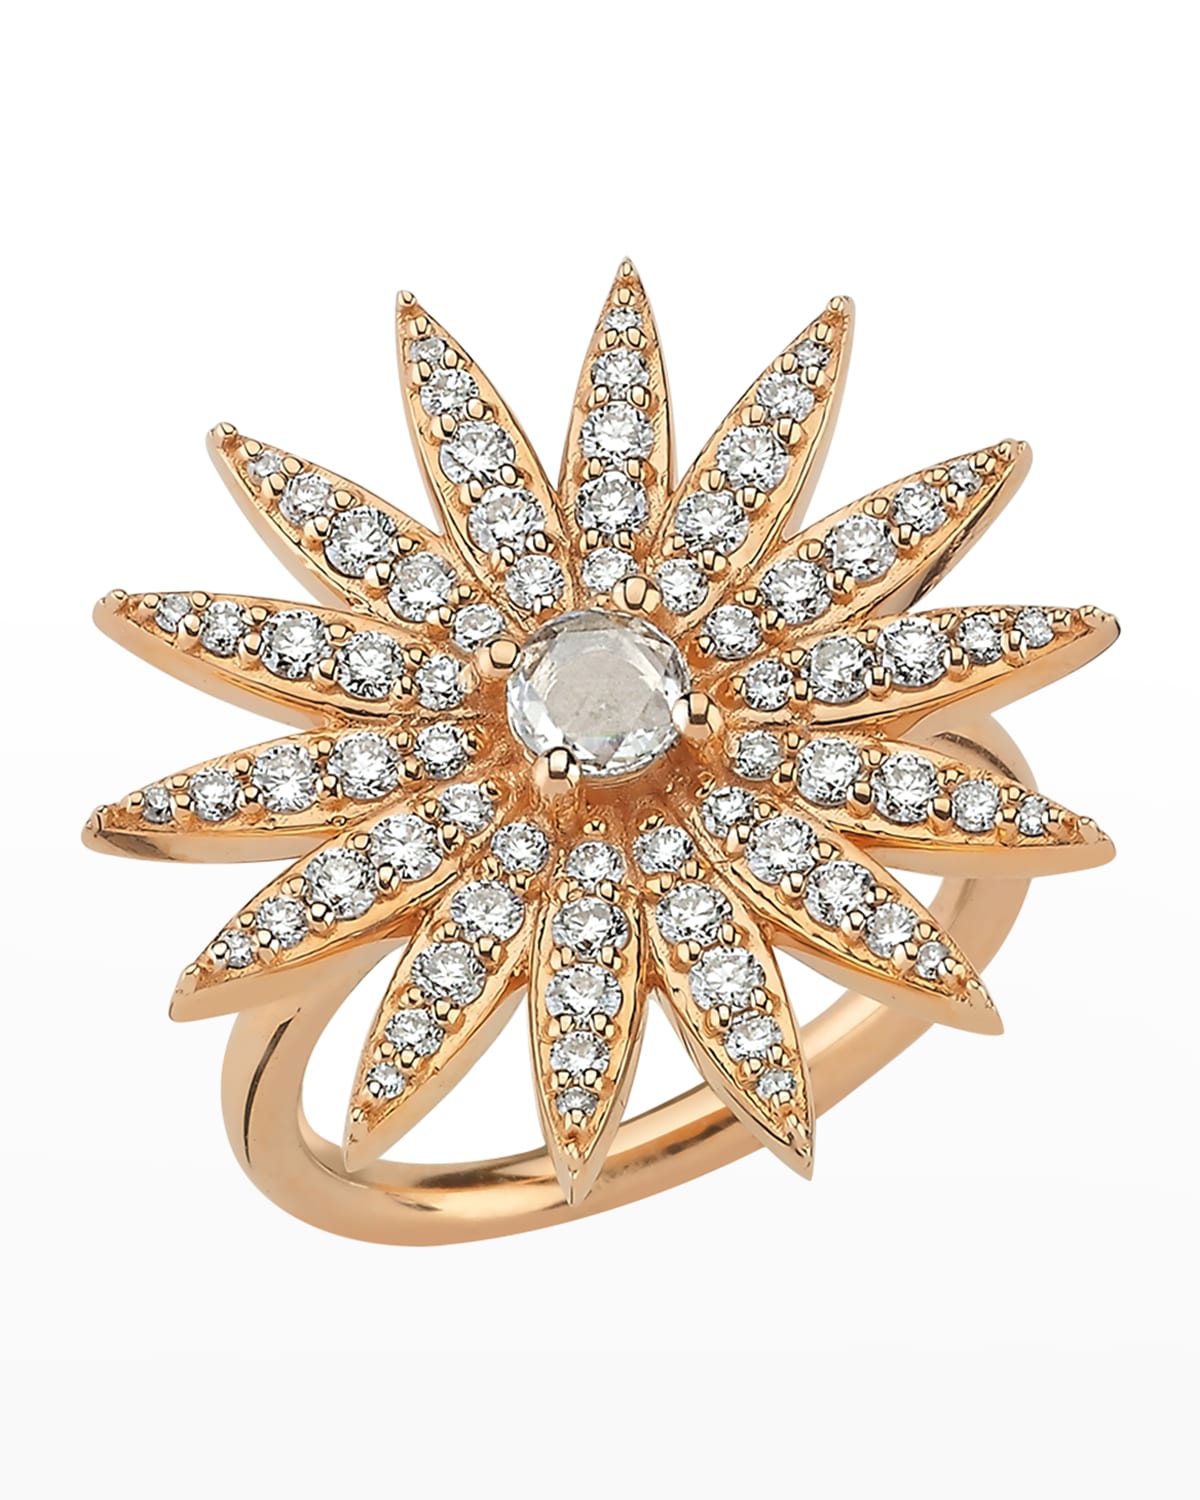 BeeGoddess Empress Diamond Ring in Yellow Gold, Size 7